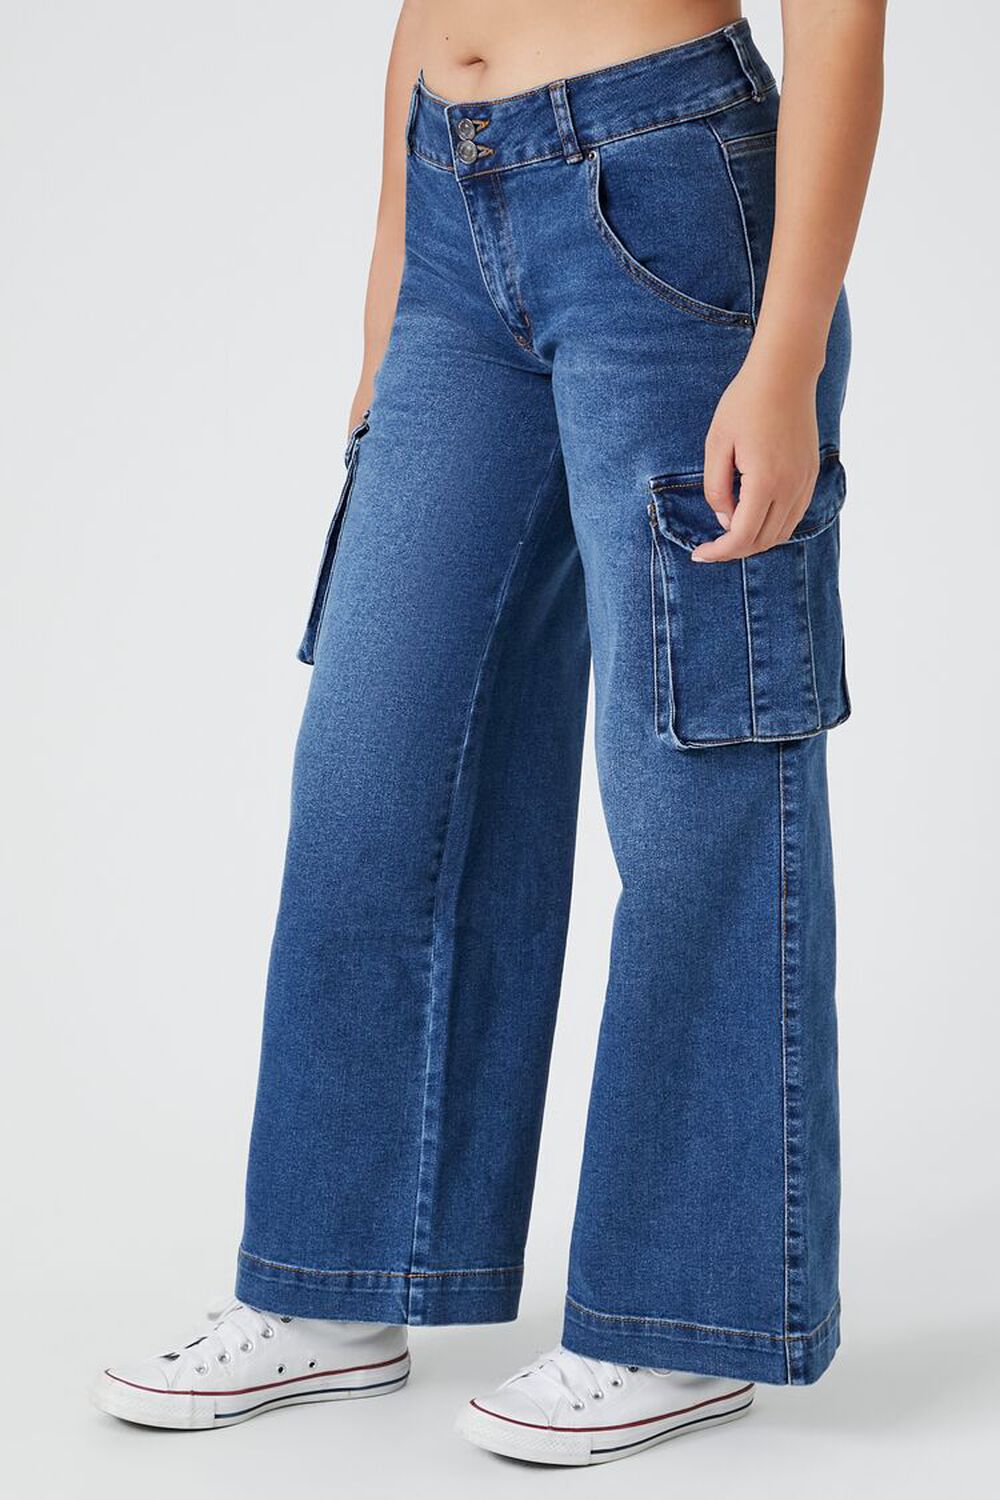 DARK DENIM Low-Rise Wide-Leg Cargo Jeans, image 2